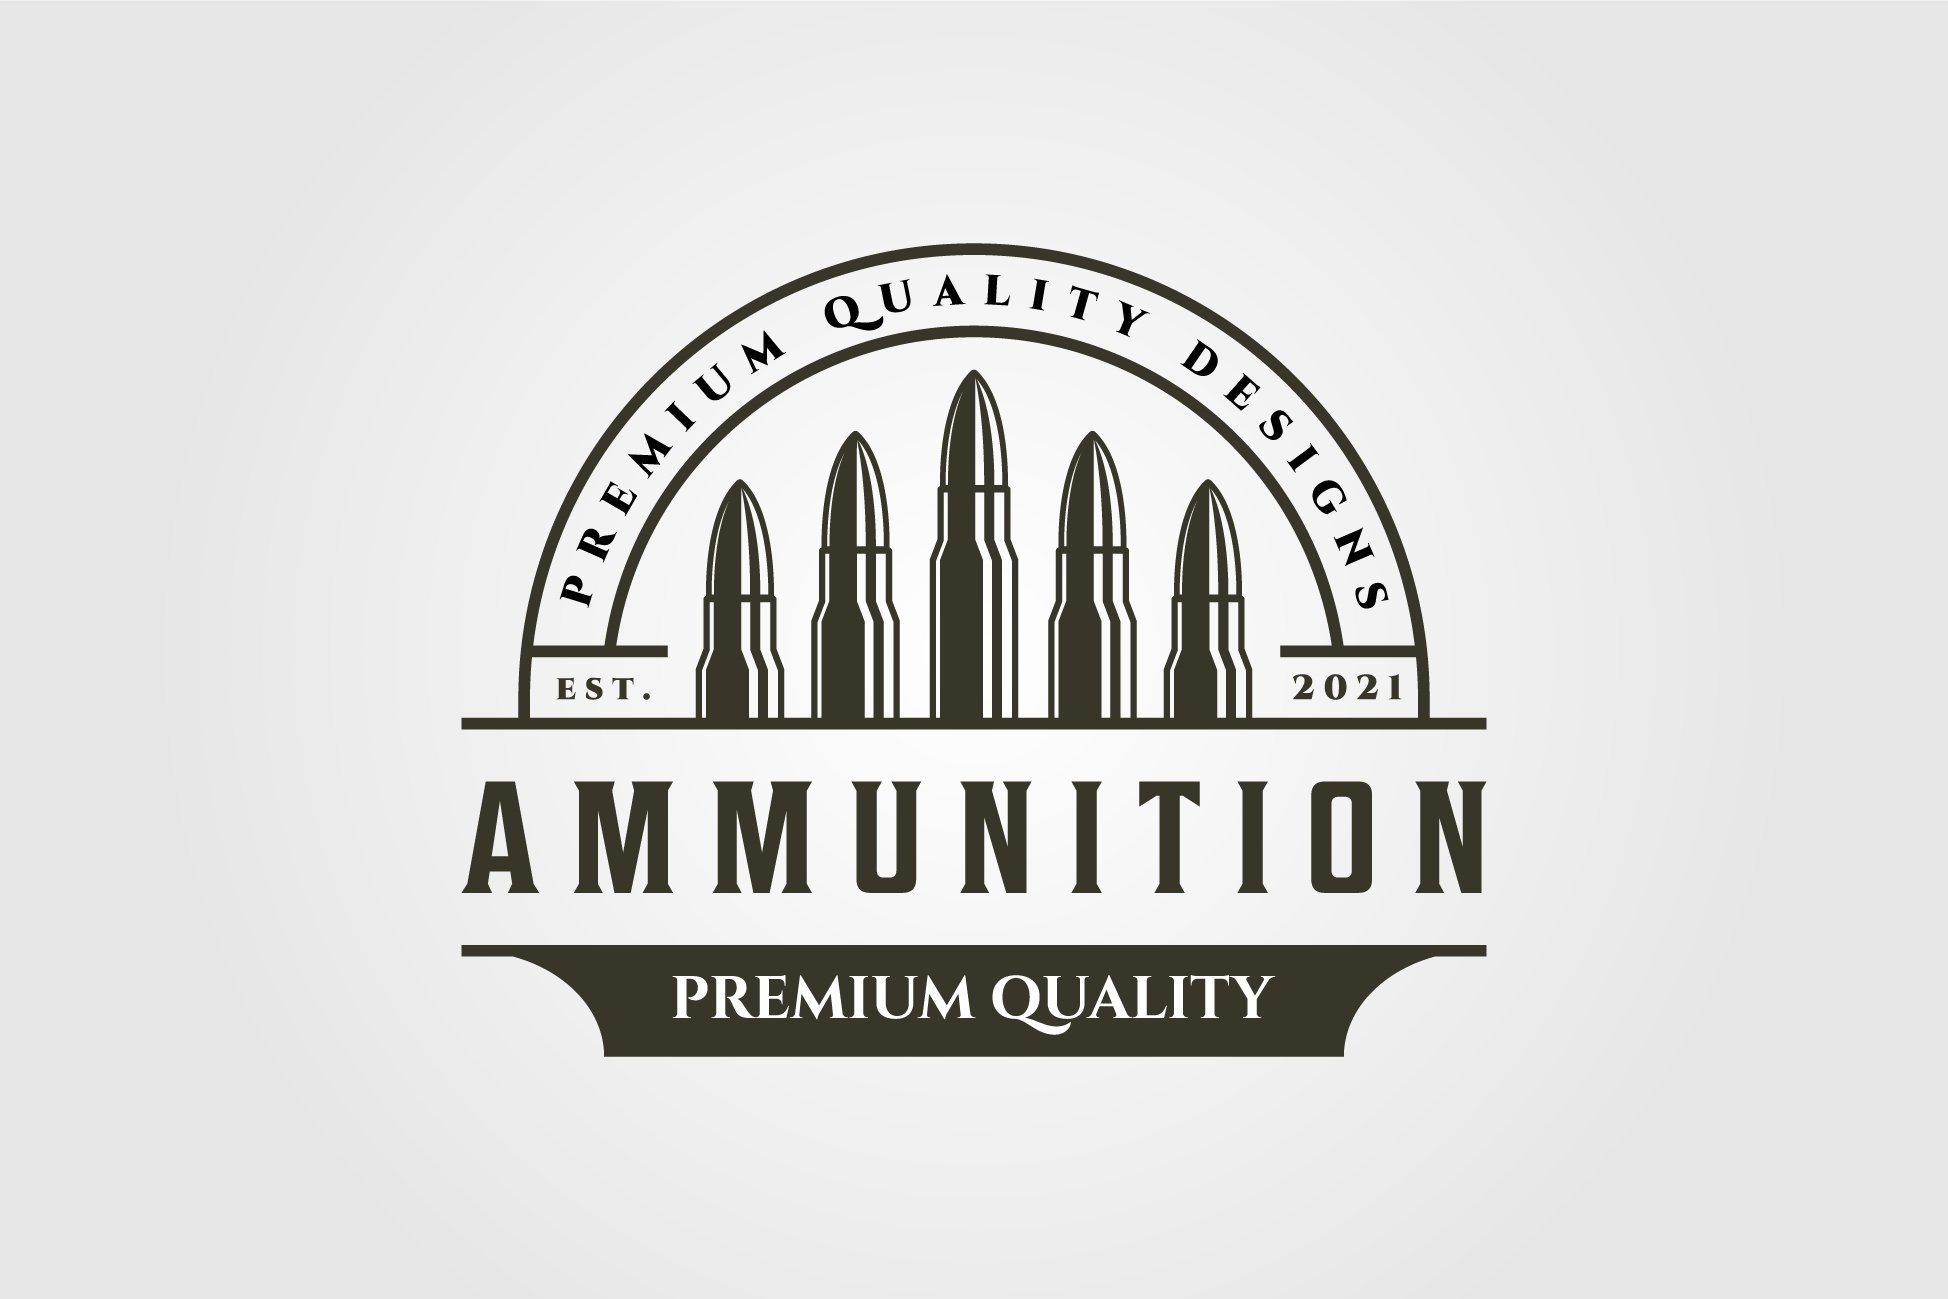 ammunition icon logo vintage vector cover image.